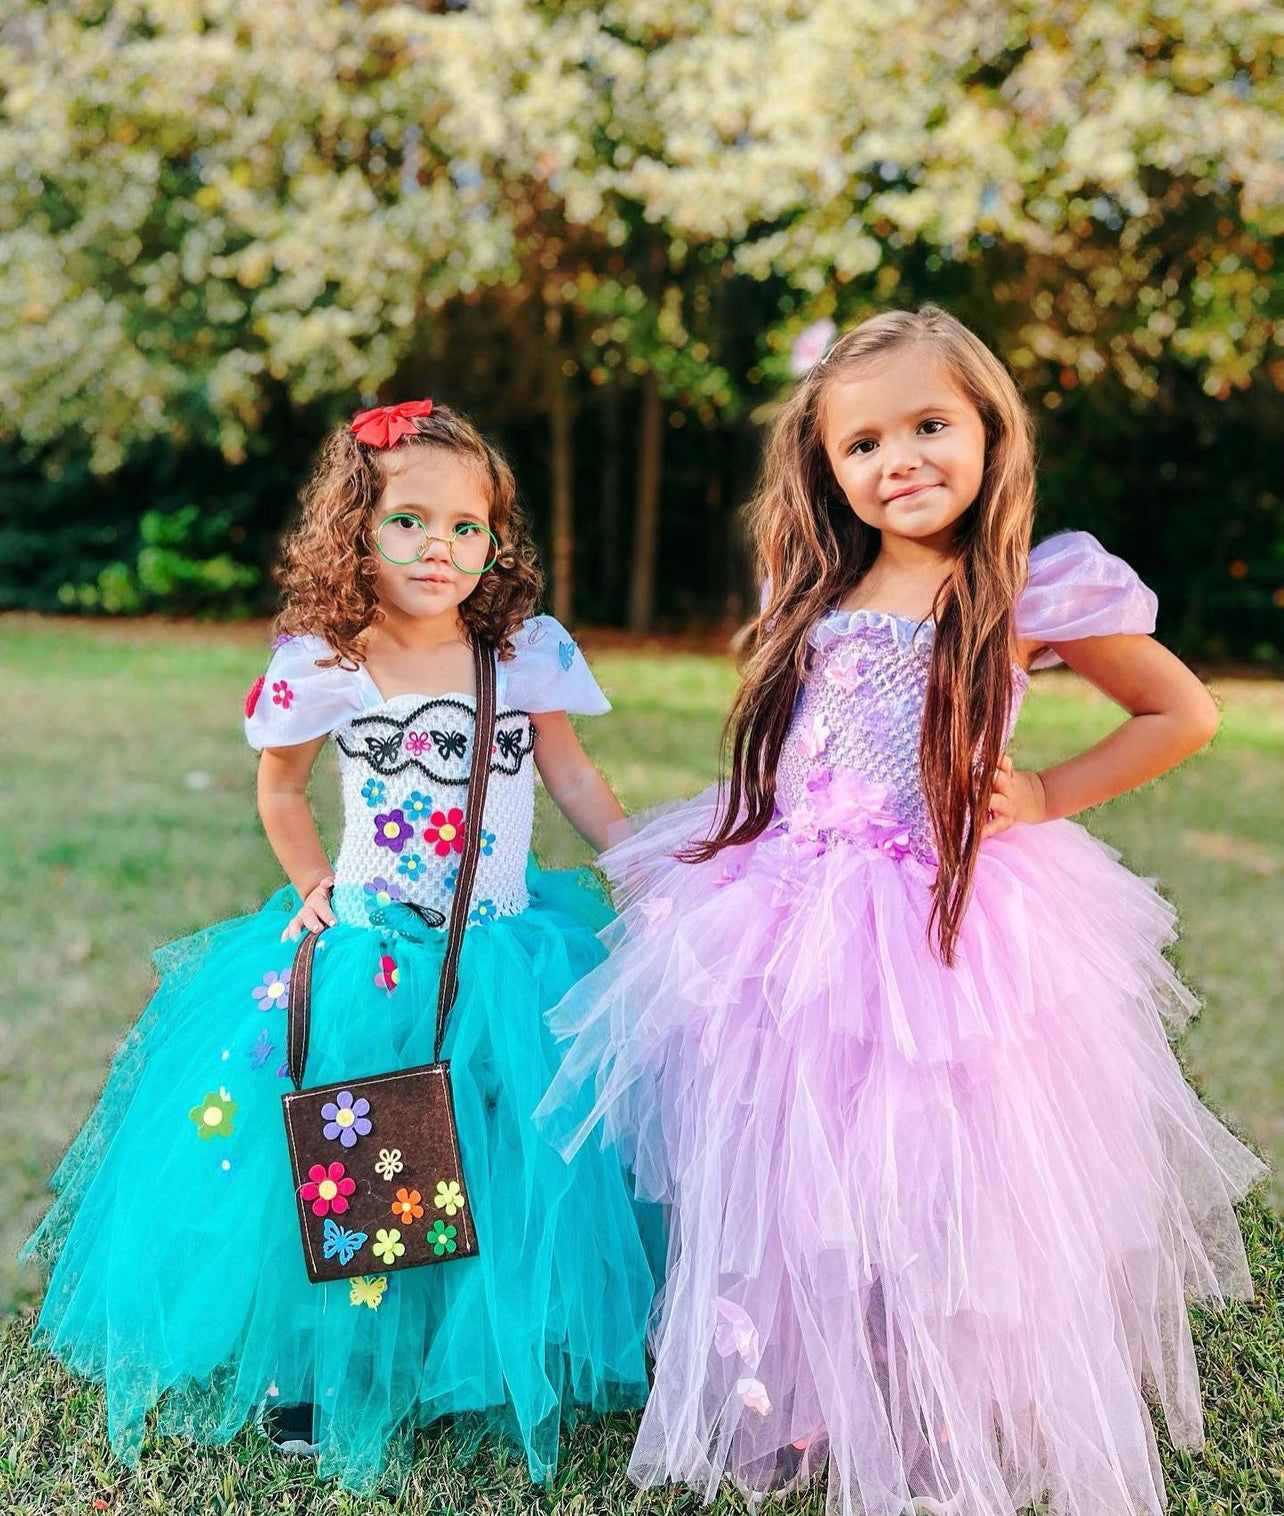 Isabela Tutu Dress Toddlers Girls Encanto